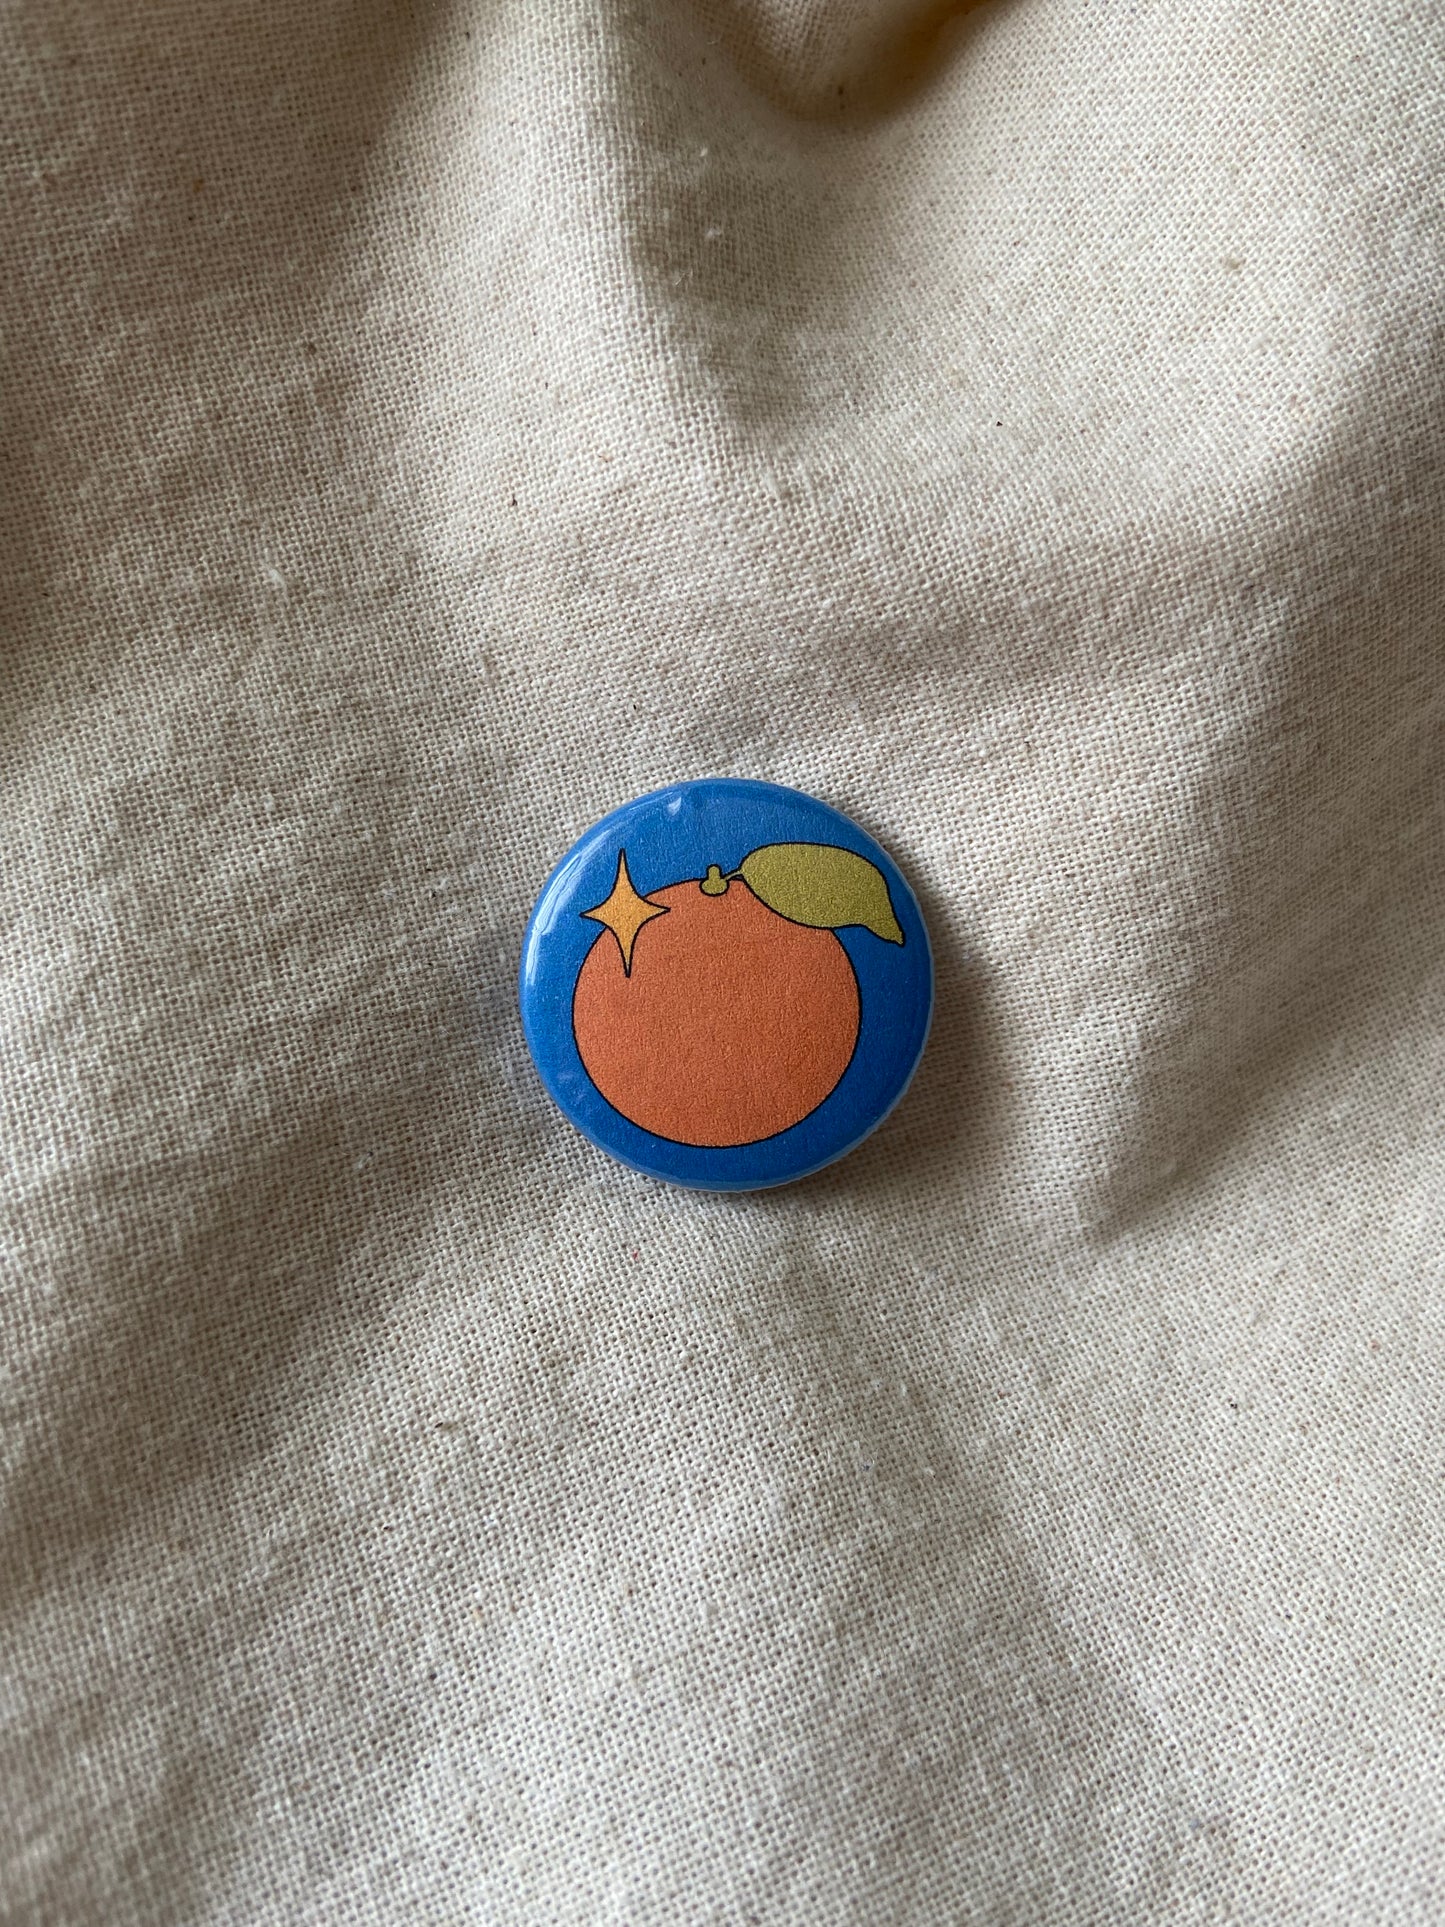 Orange Button Pin 1"